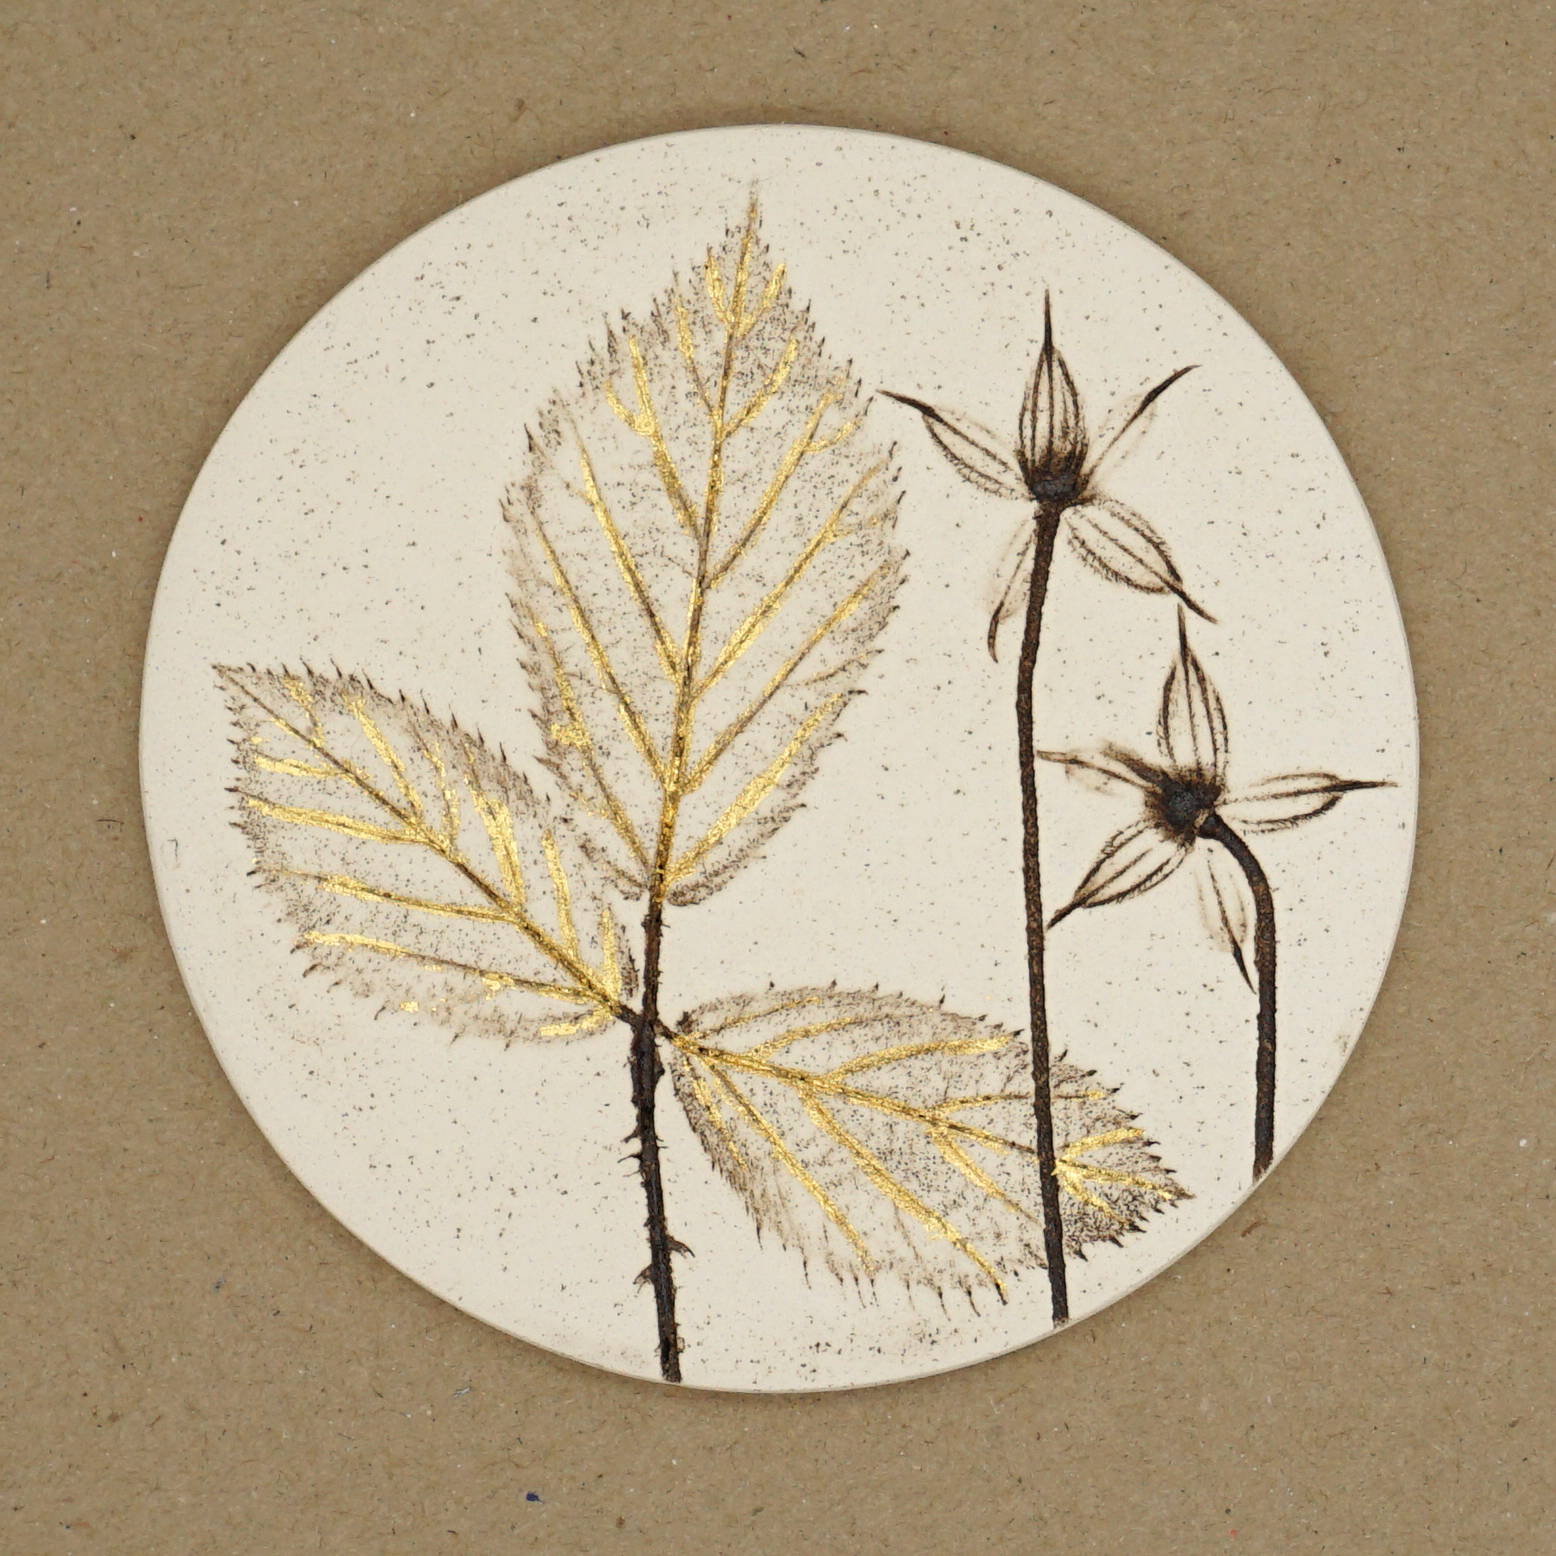 10cm Round Botanical Tile With 24ct Gold Leaf